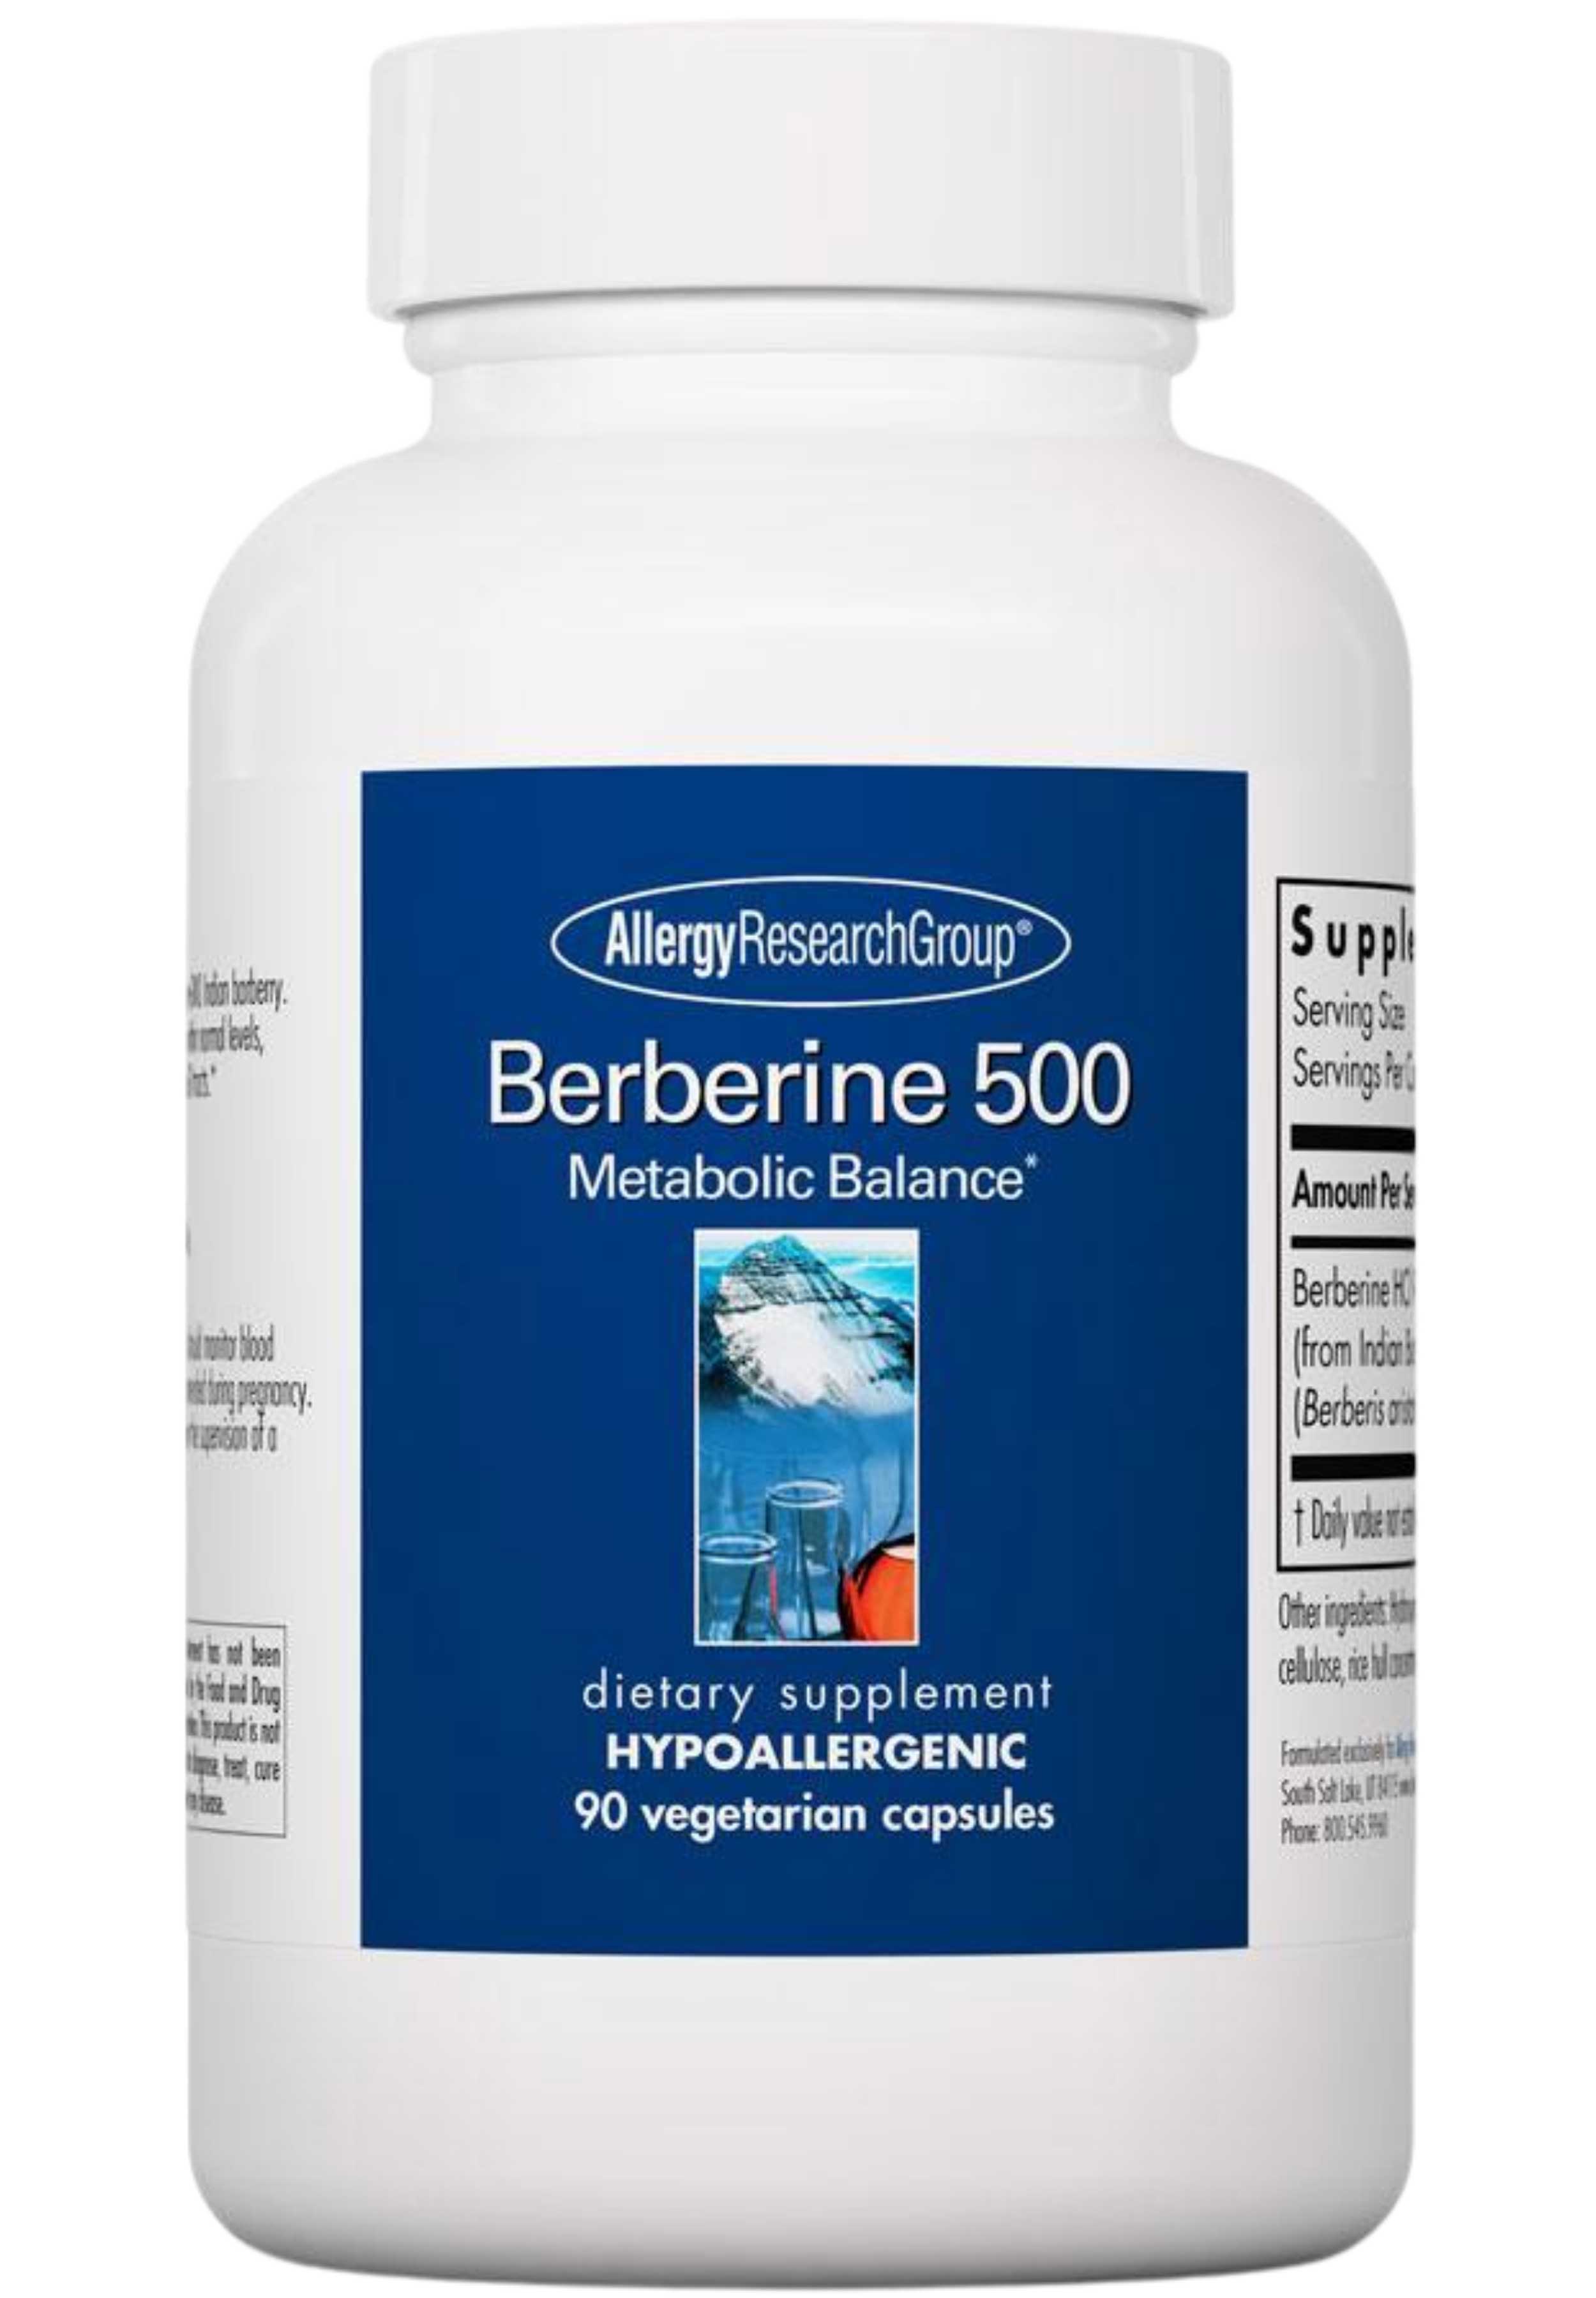 Allergy Research Group Berberine 500